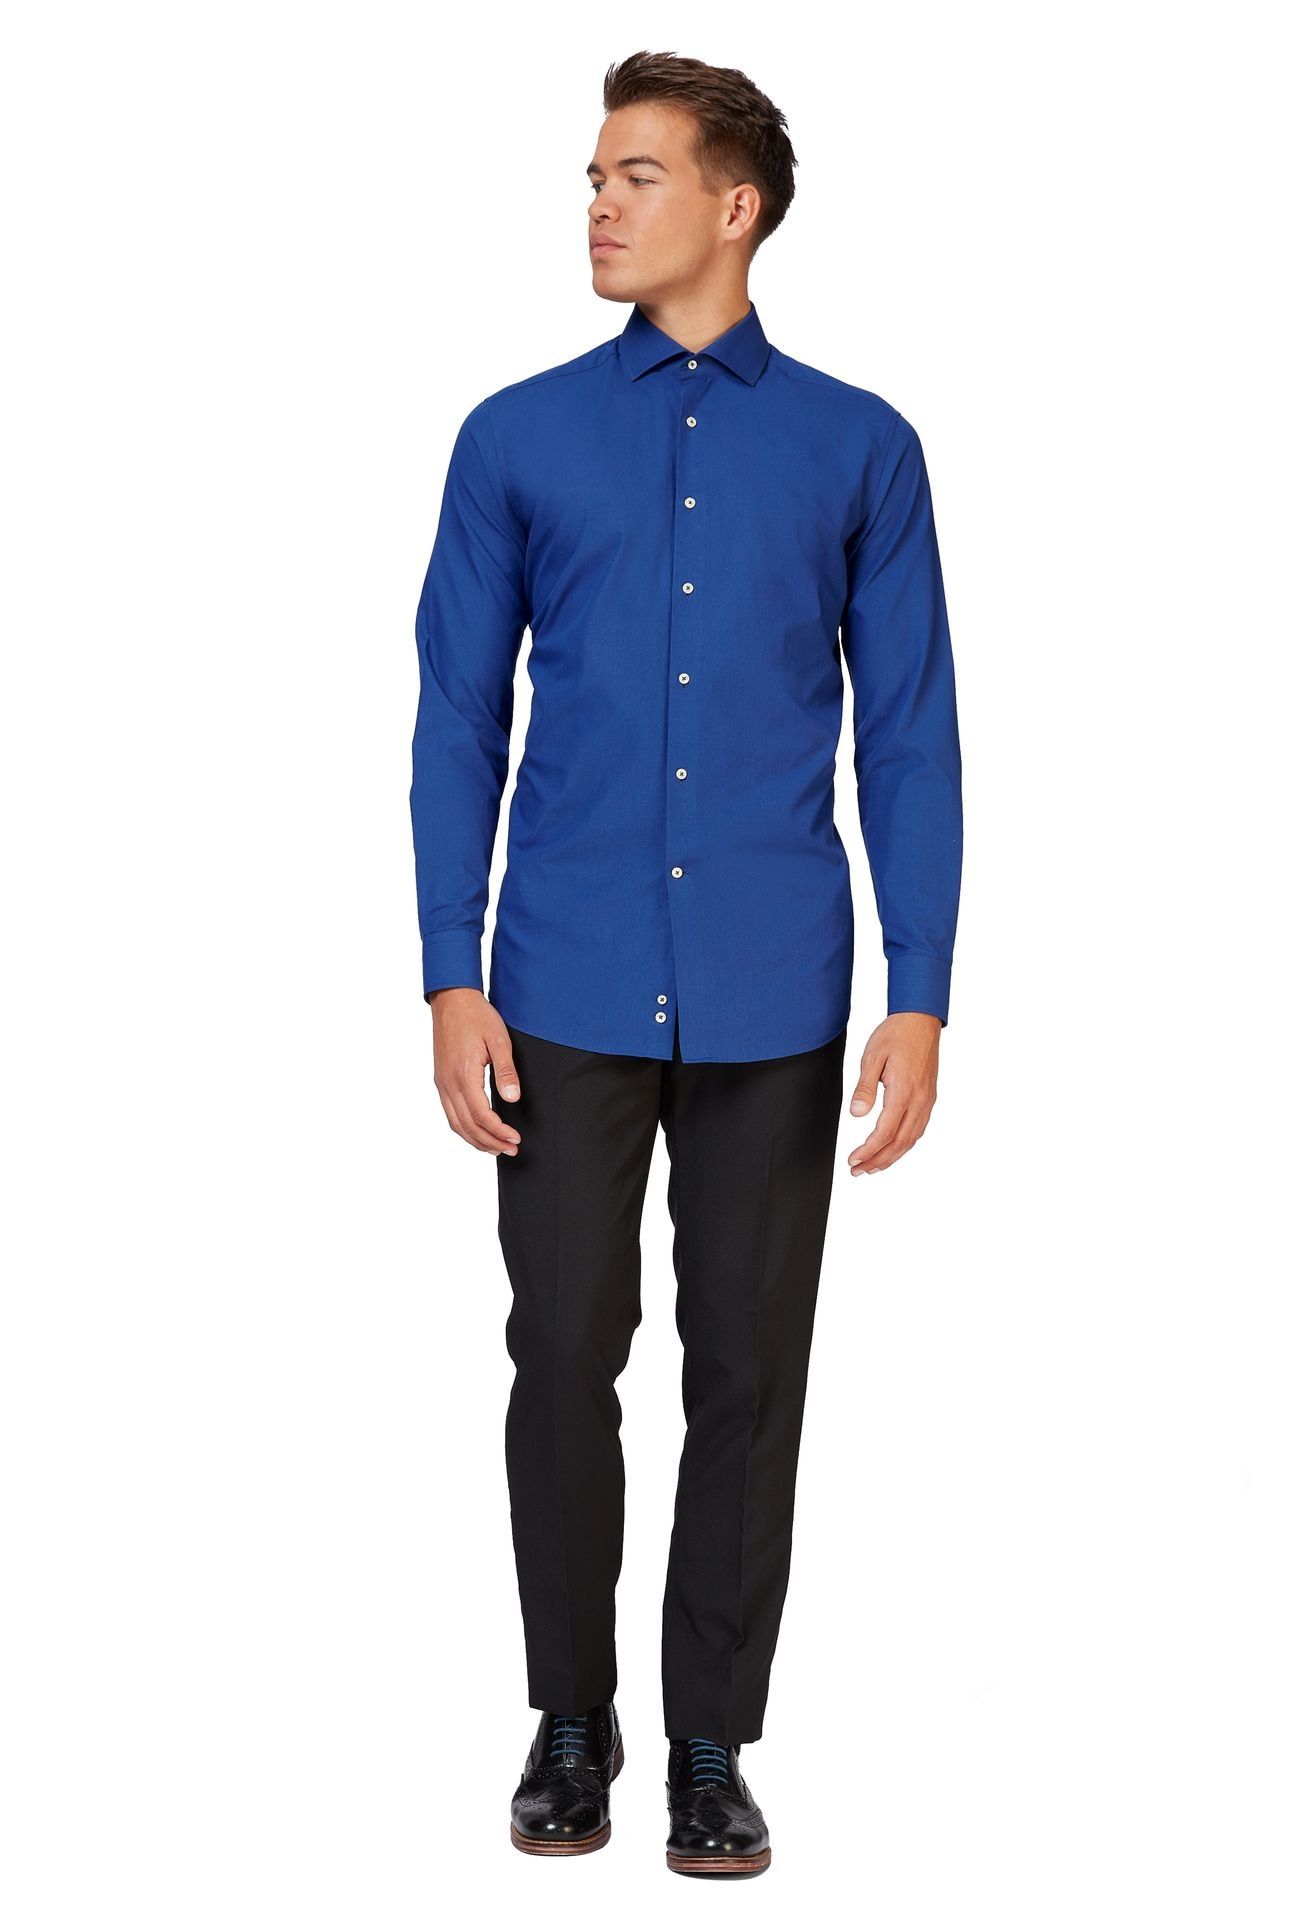 Basic blouse Opposuits navy blauw